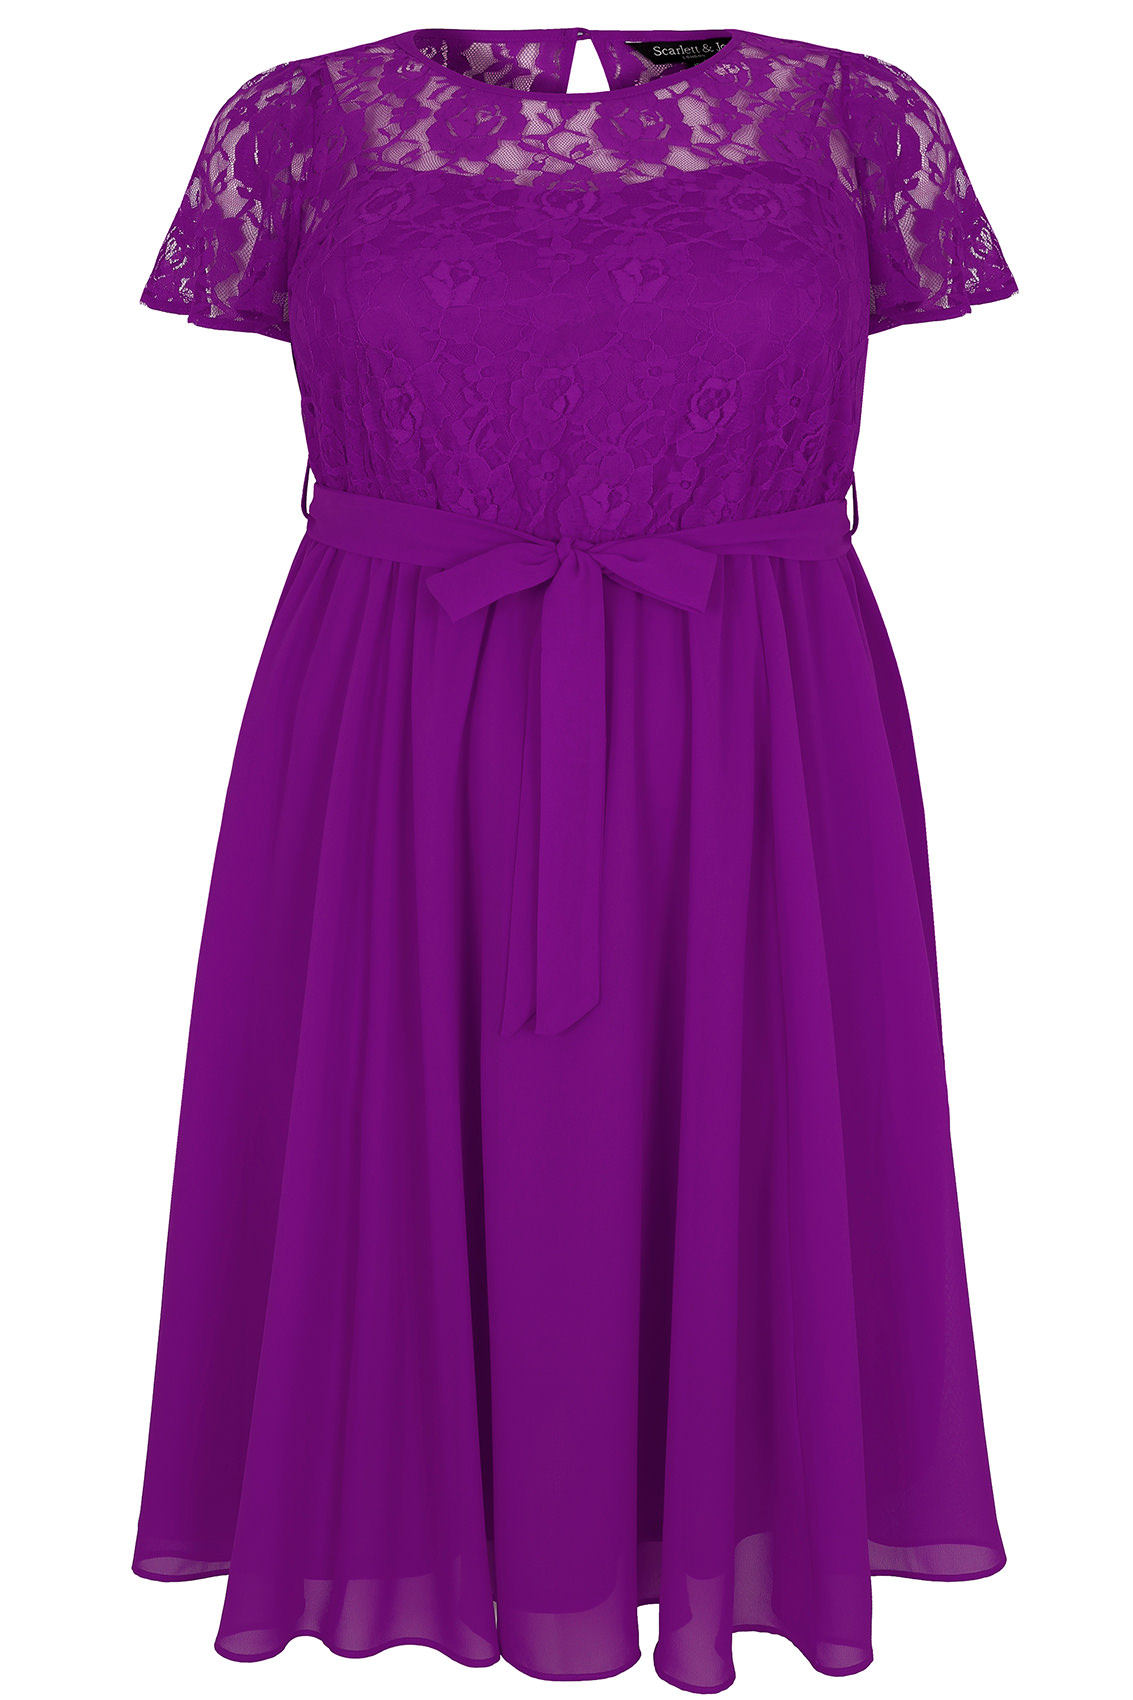 SCARLETT & JO Purple Midi Dress With Lace Top & Pleated Skirt, Plus ...